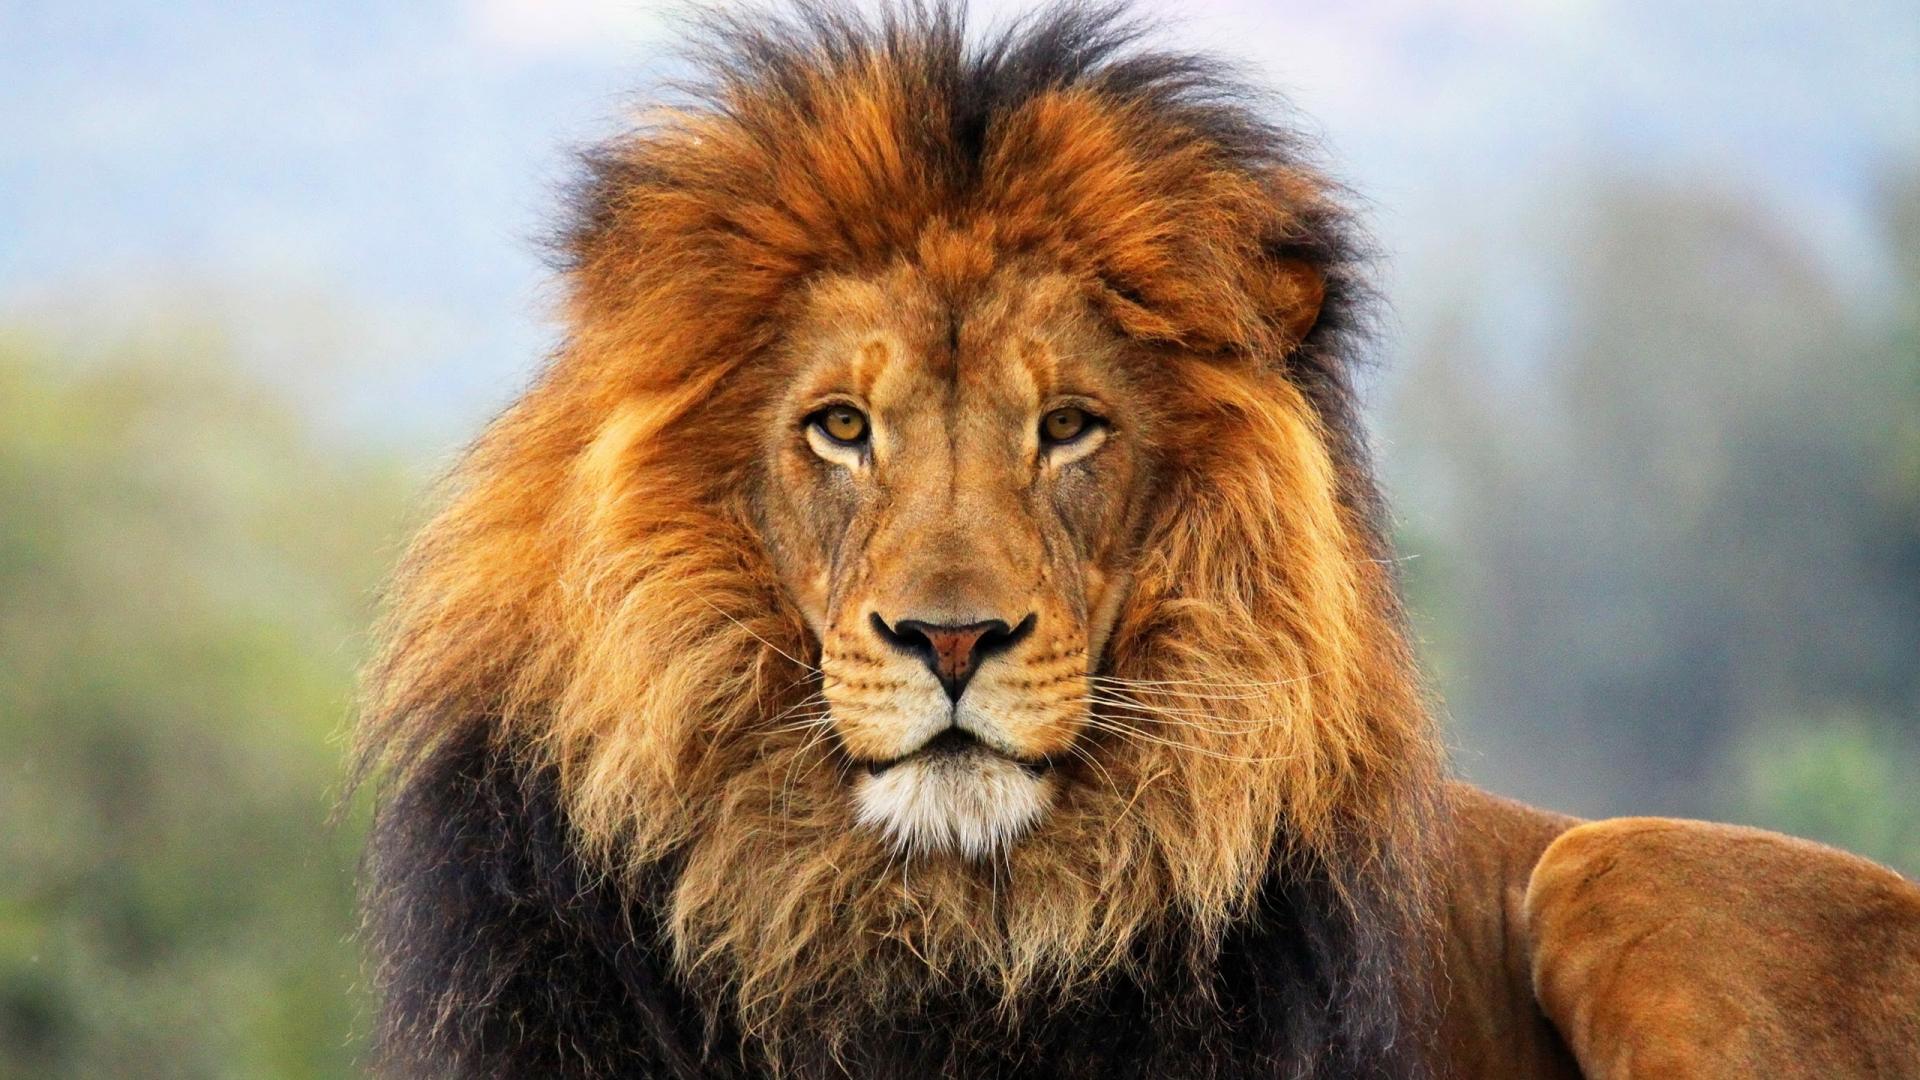 lion wallpaper hd 1080p,mammal,lion,vertebrate,wildlife,hair